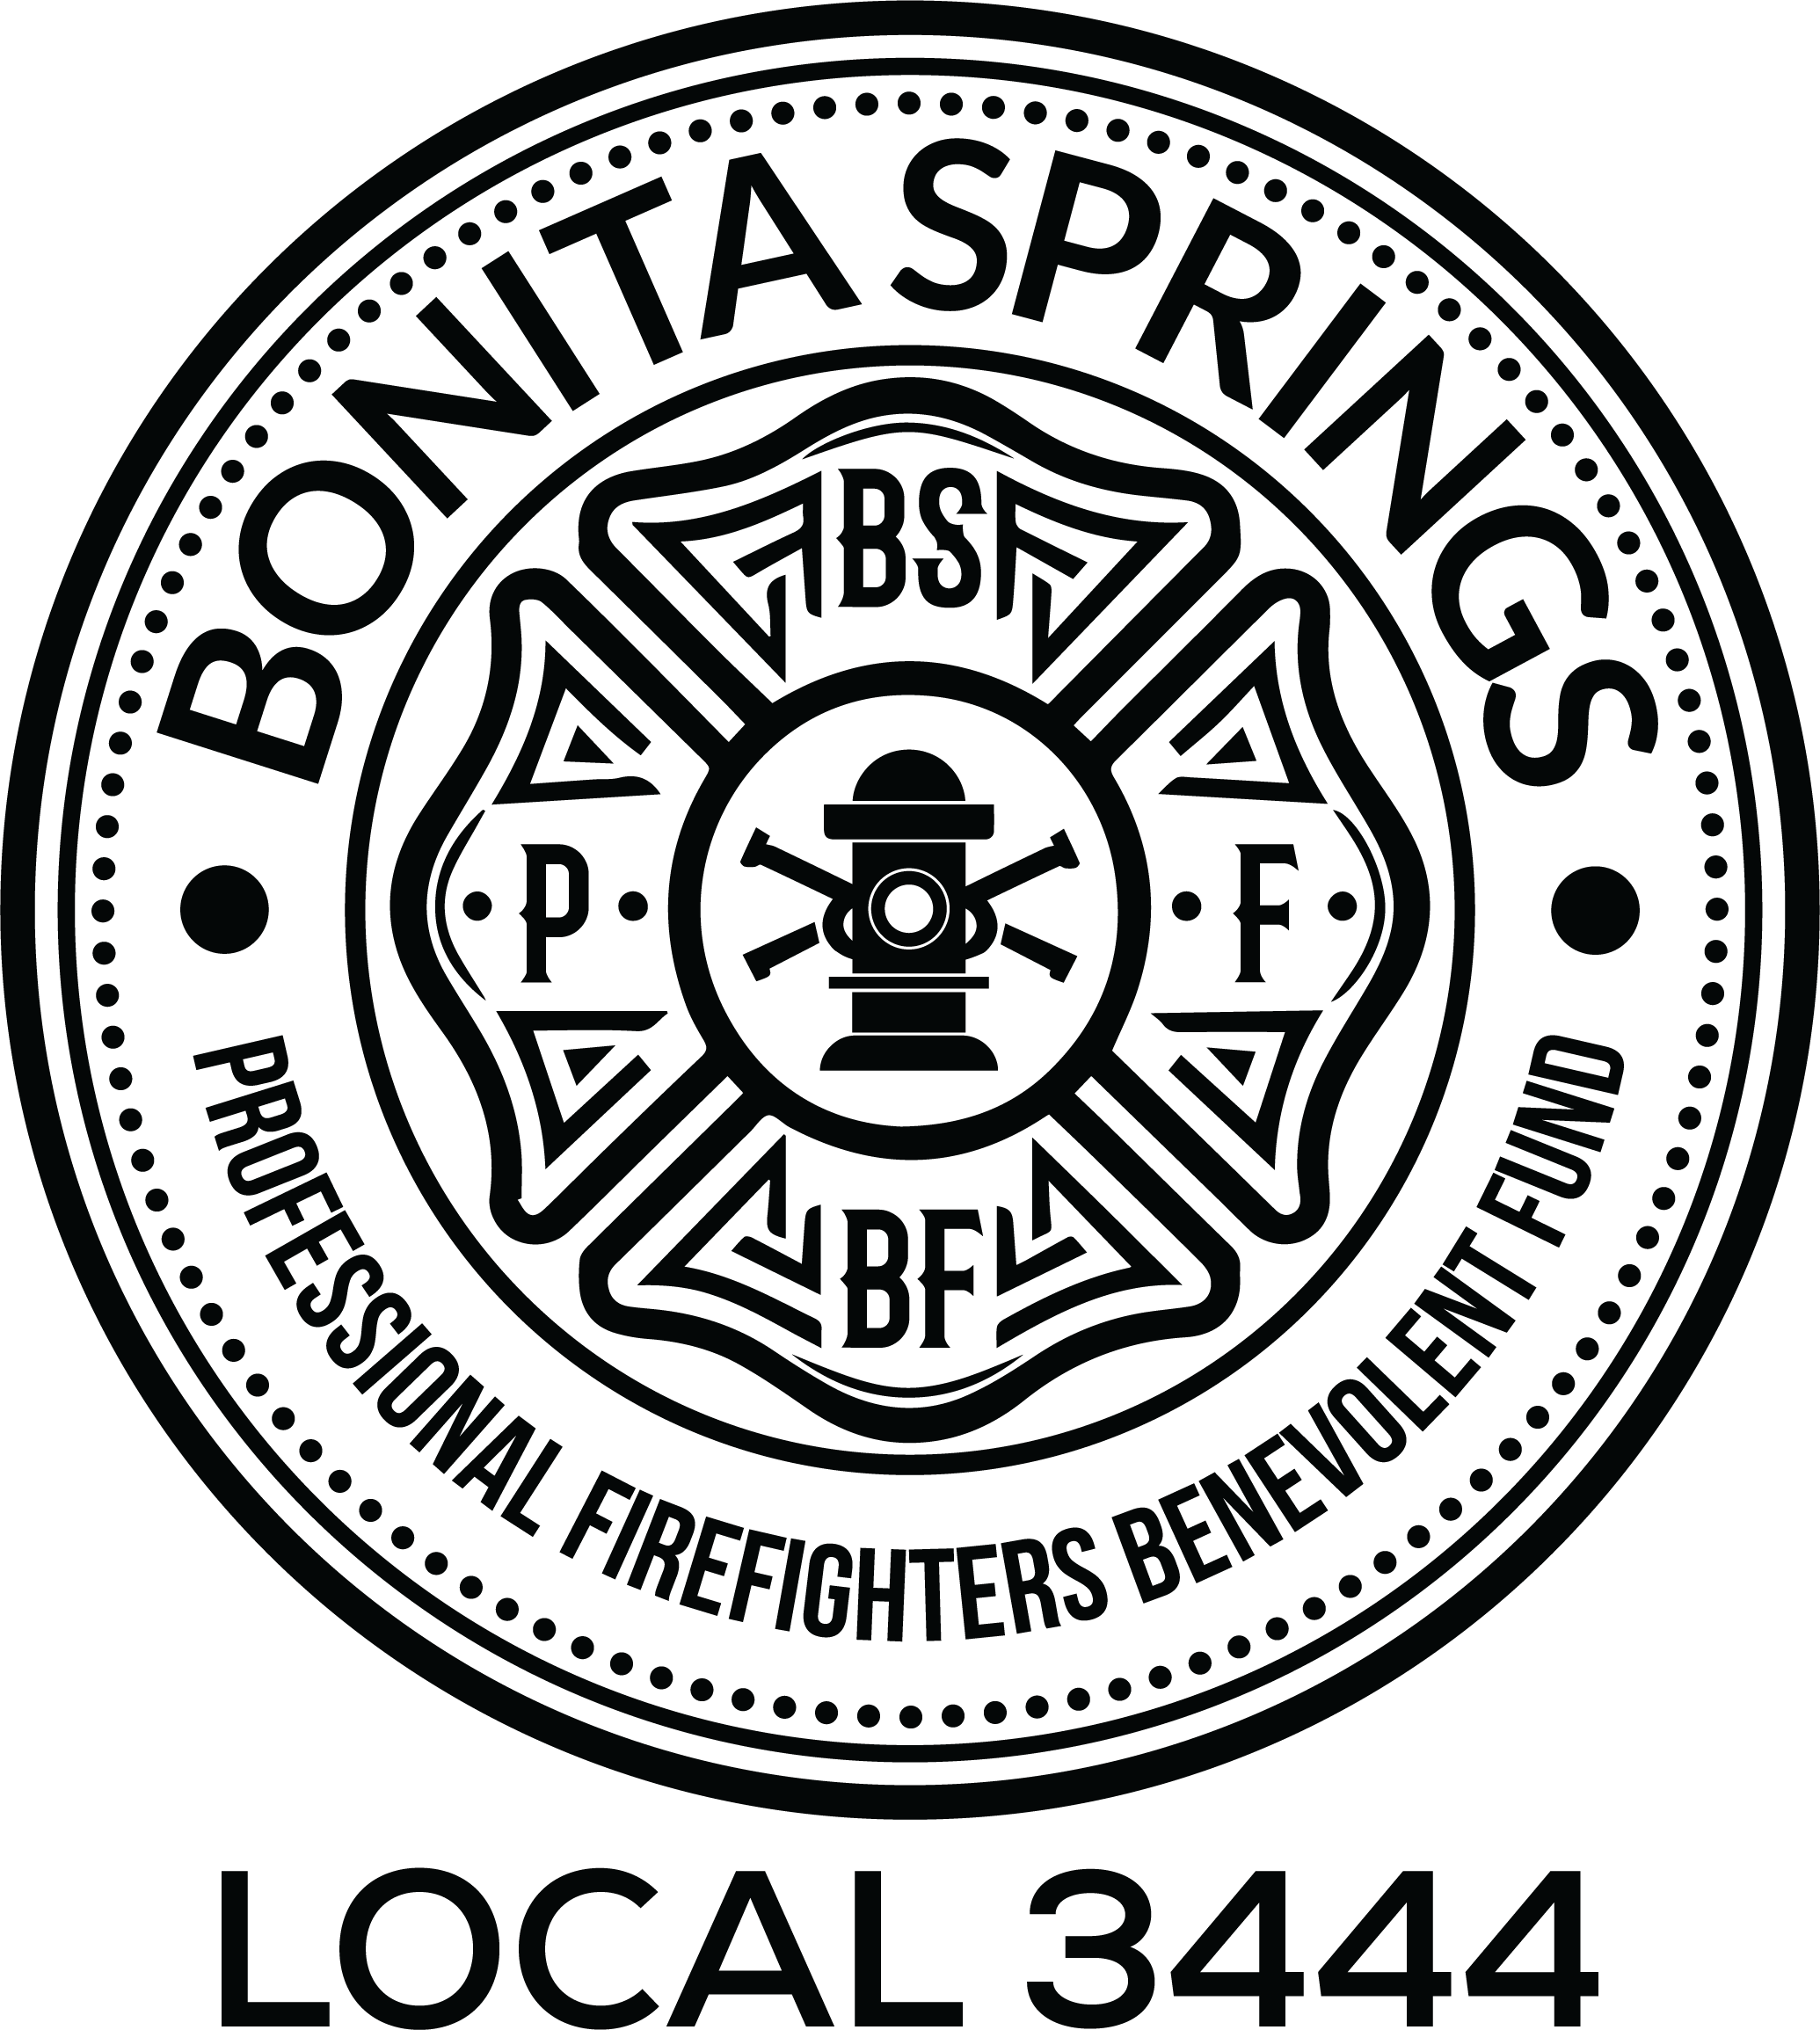 Bonita Springs Professional Firefighters Benevolent Fund Local 3444